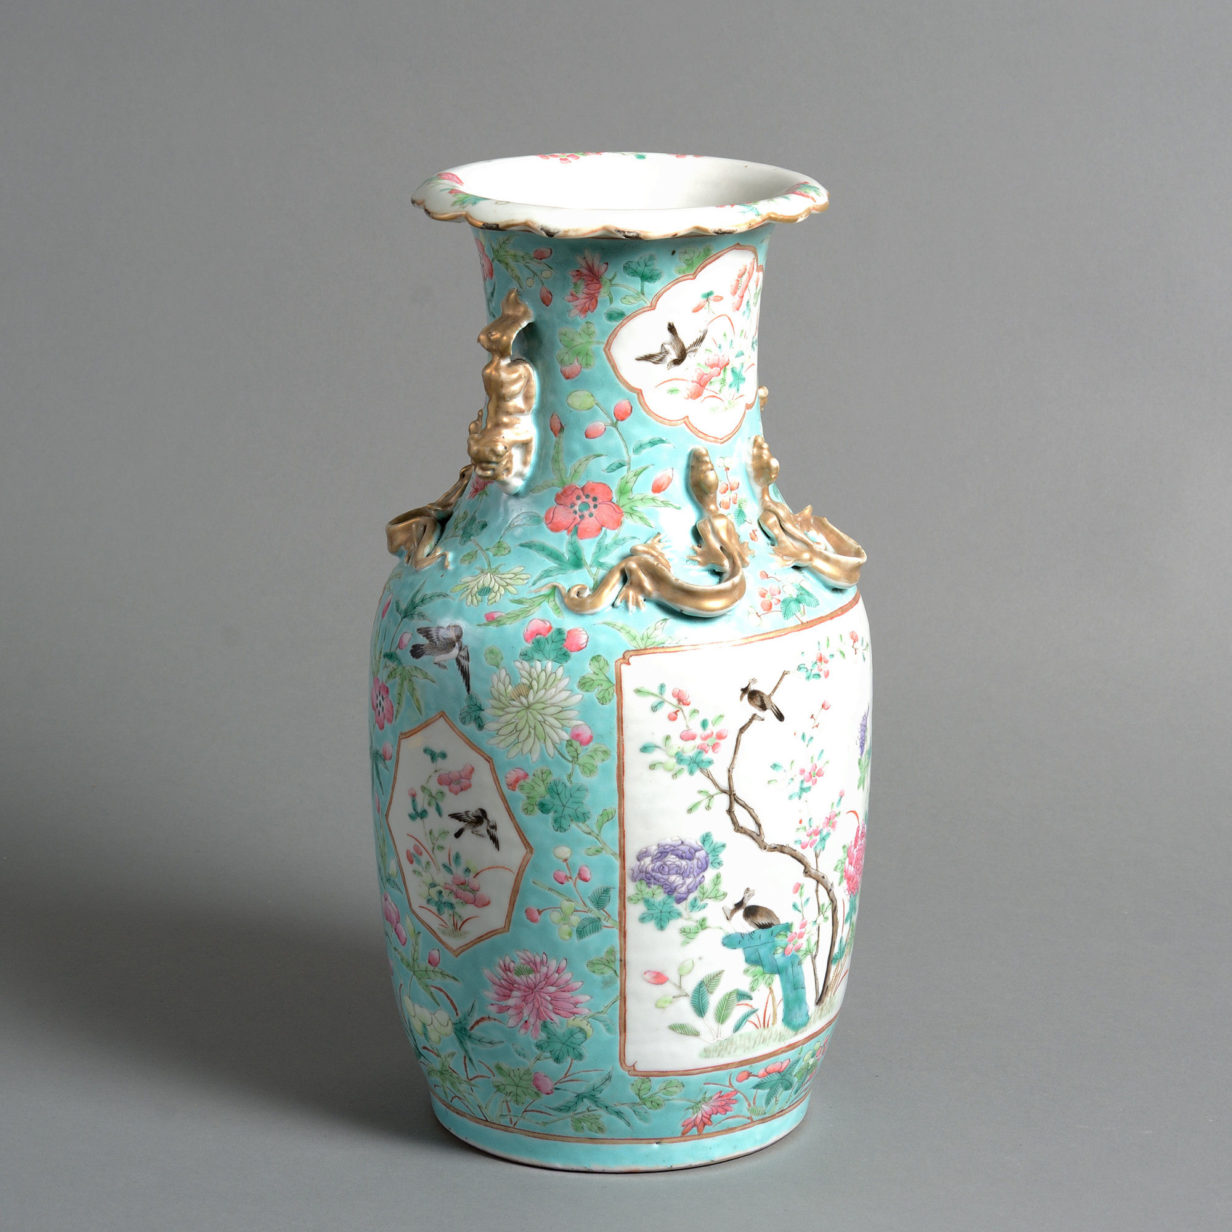 A 19th century turquoise glazed canton porcelain vase